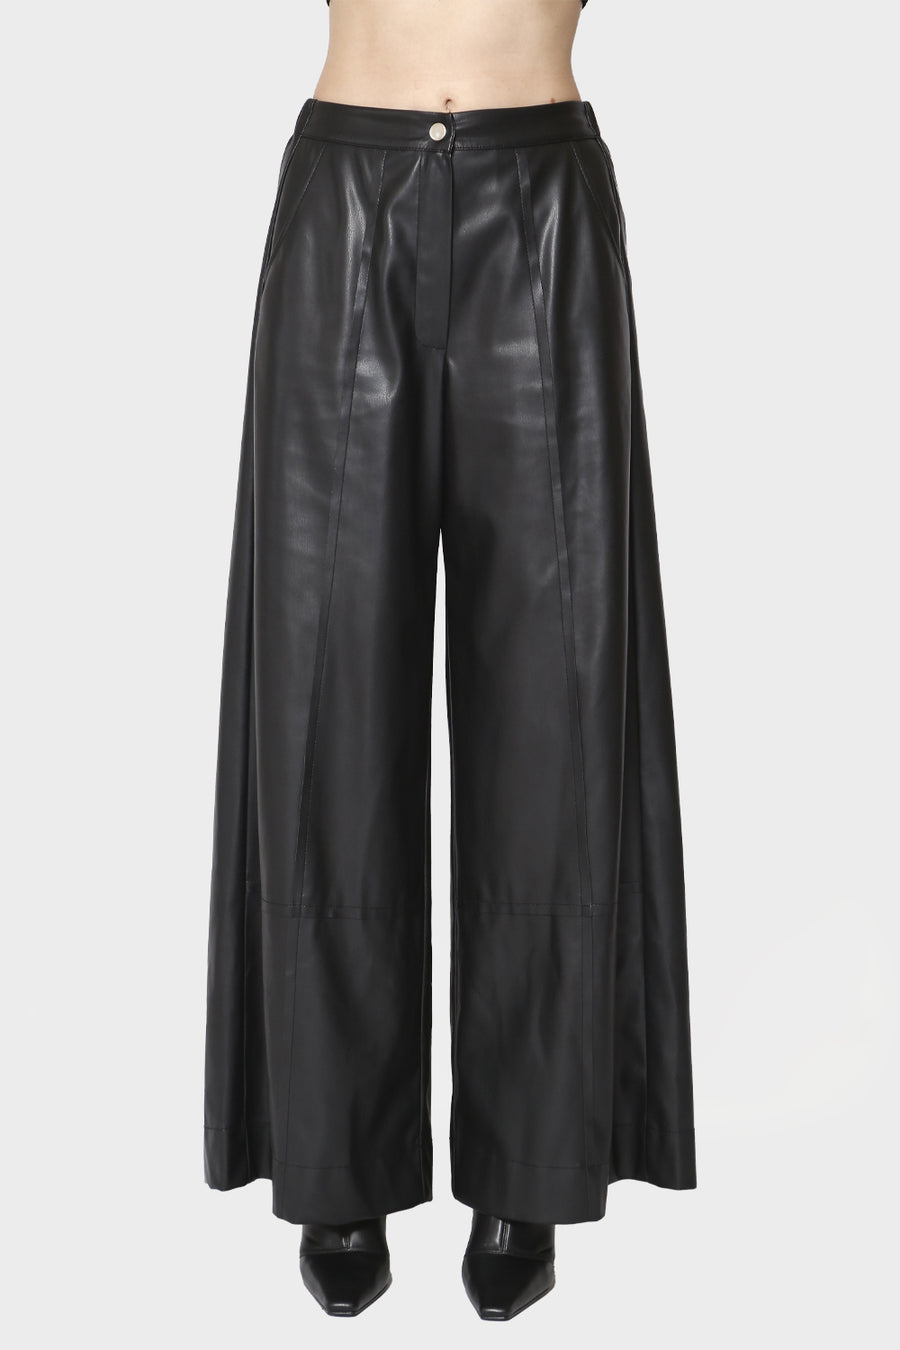 Pantalone Nu Black in ecopelle nero K23 13014